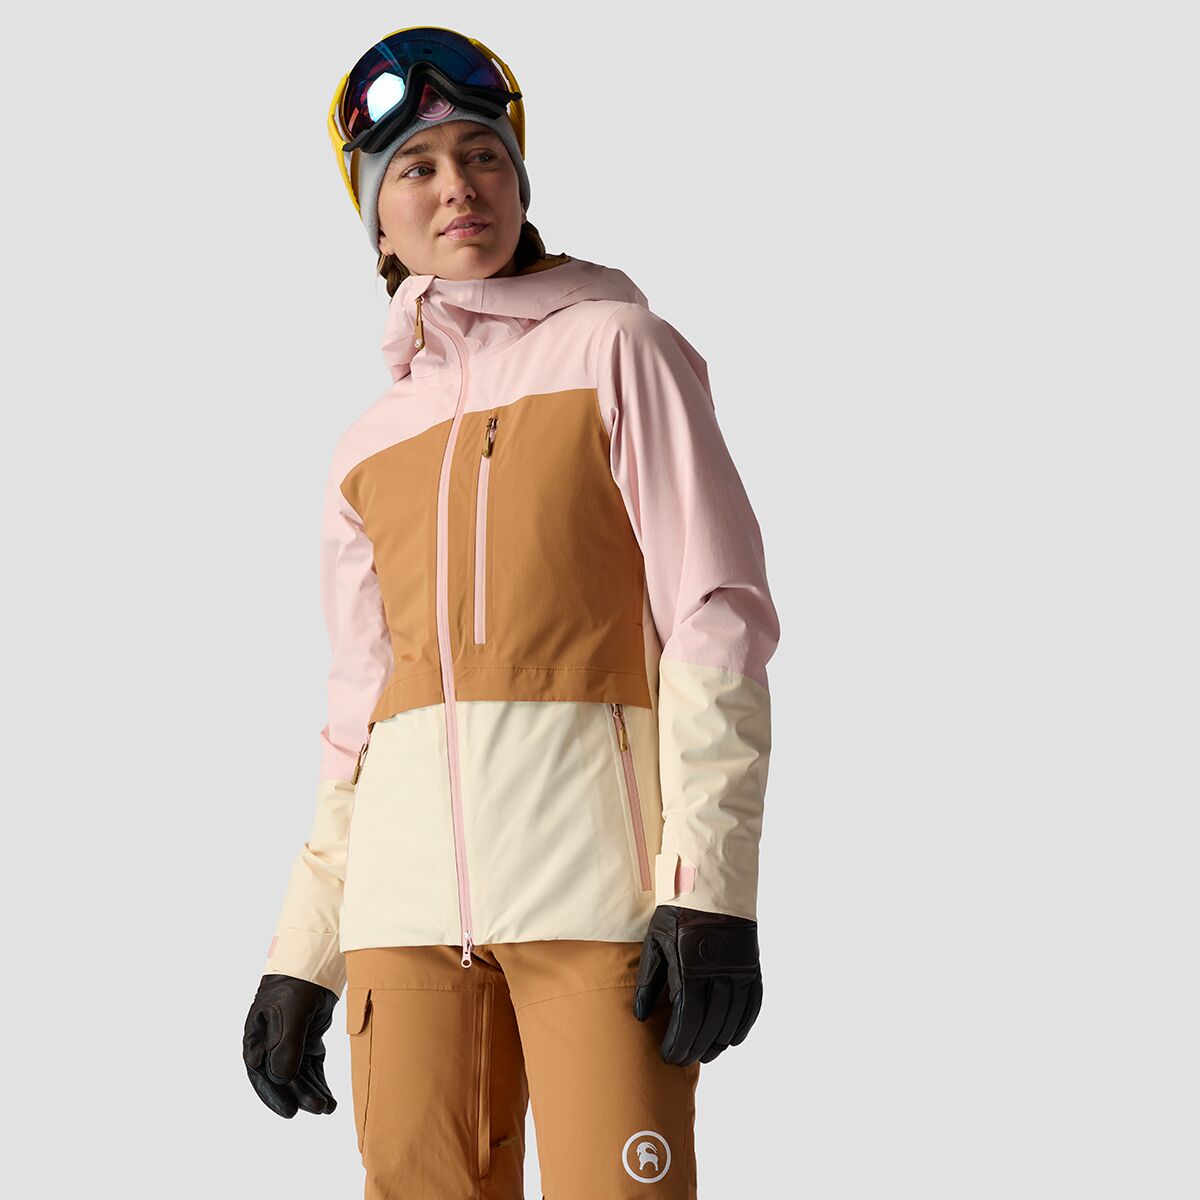 Women's Ski Jackets   Backcountry.com